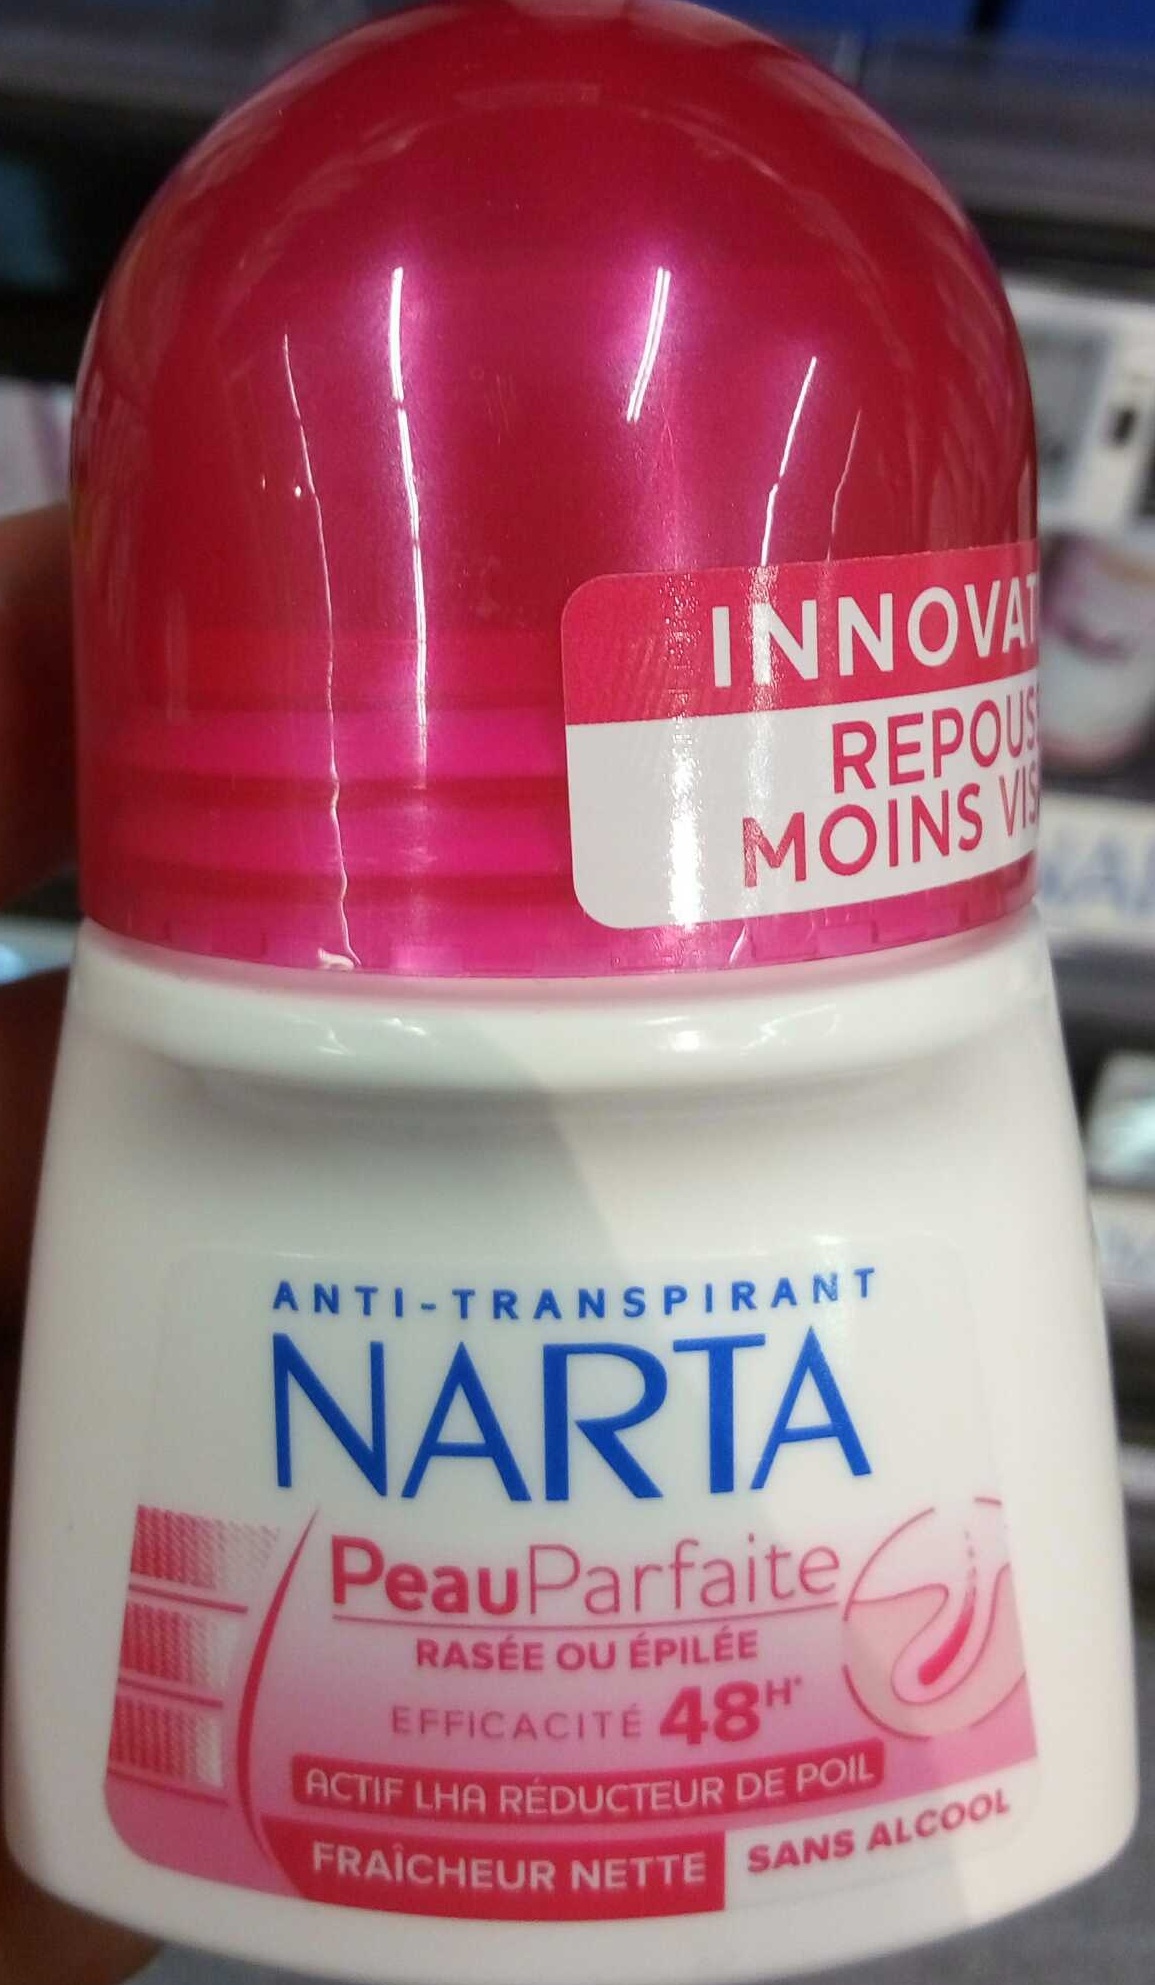 Anti-transpirant Narta Peau parfaite - Product - fr